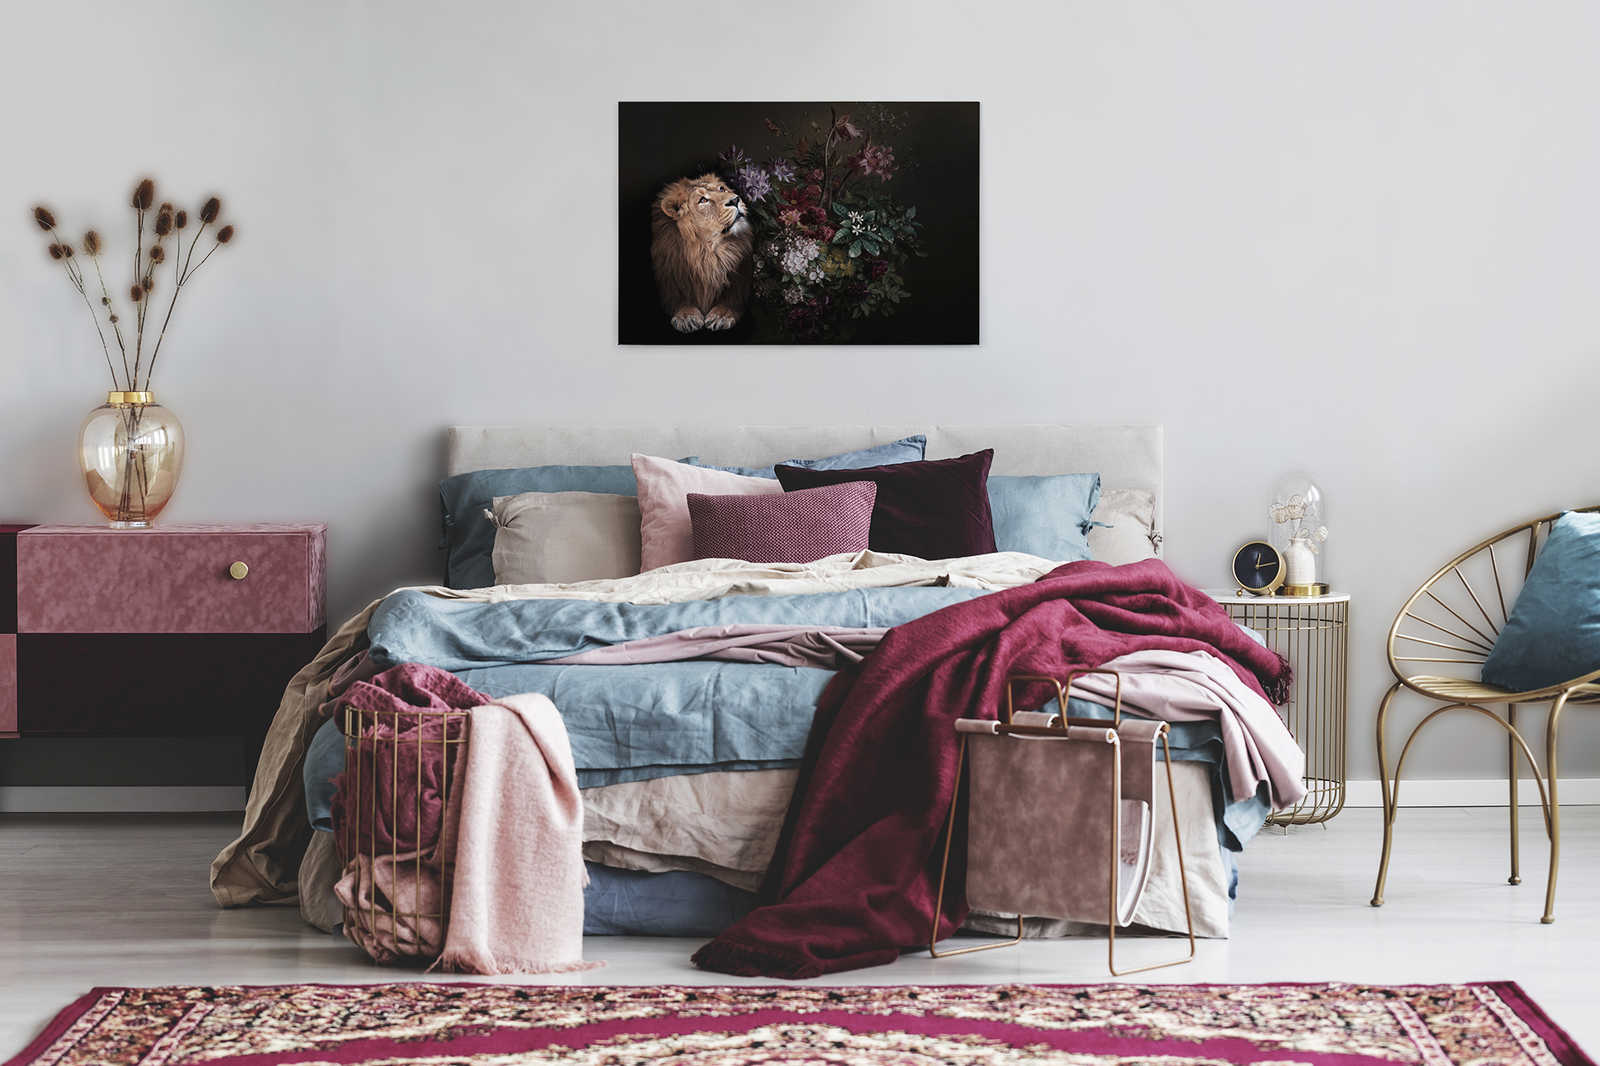             Lienzo Retrato de león con flores - 0,90 m x 0,60 m
        